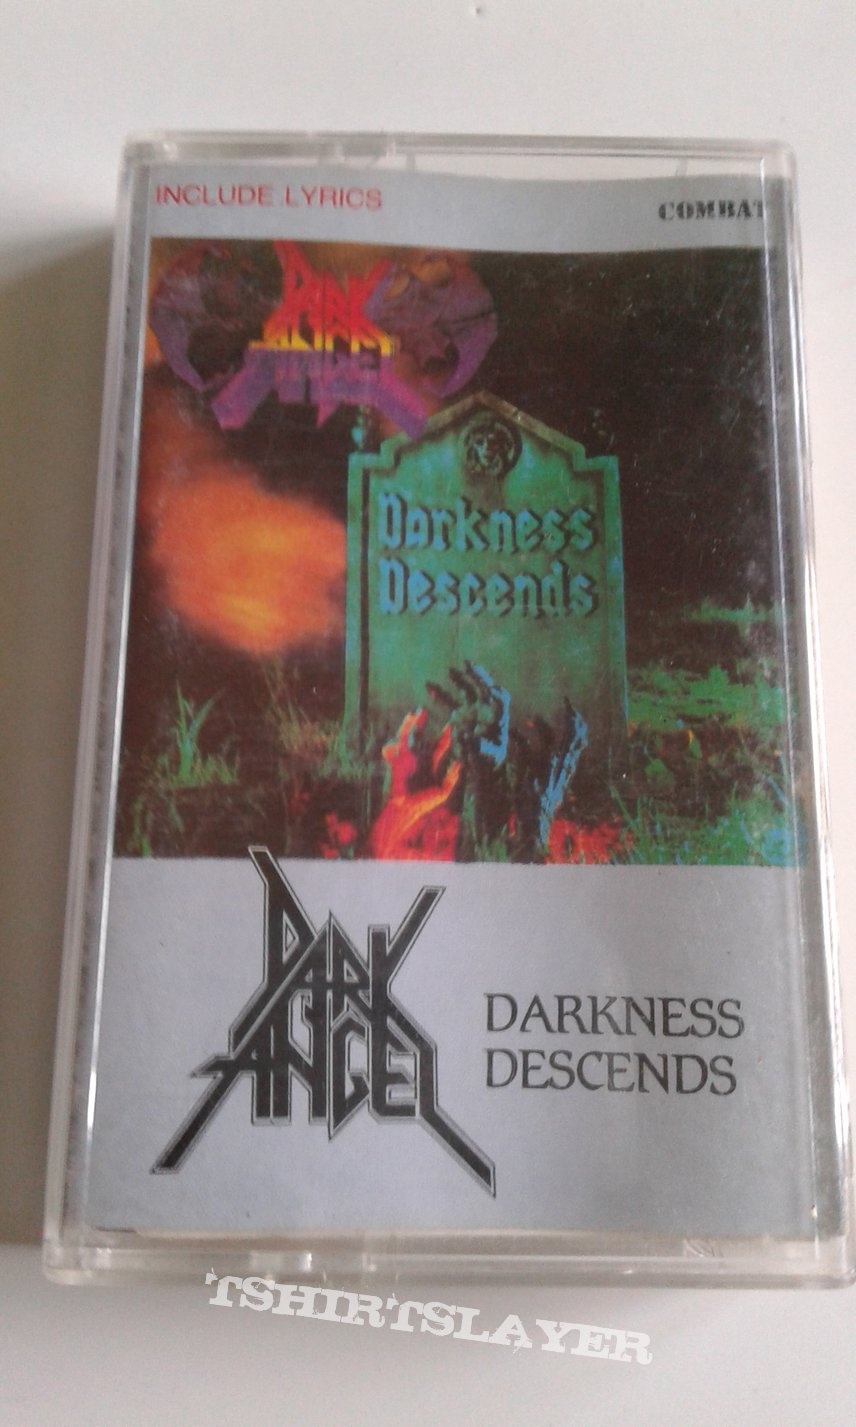 Dark Angel - Darkness Descends tape